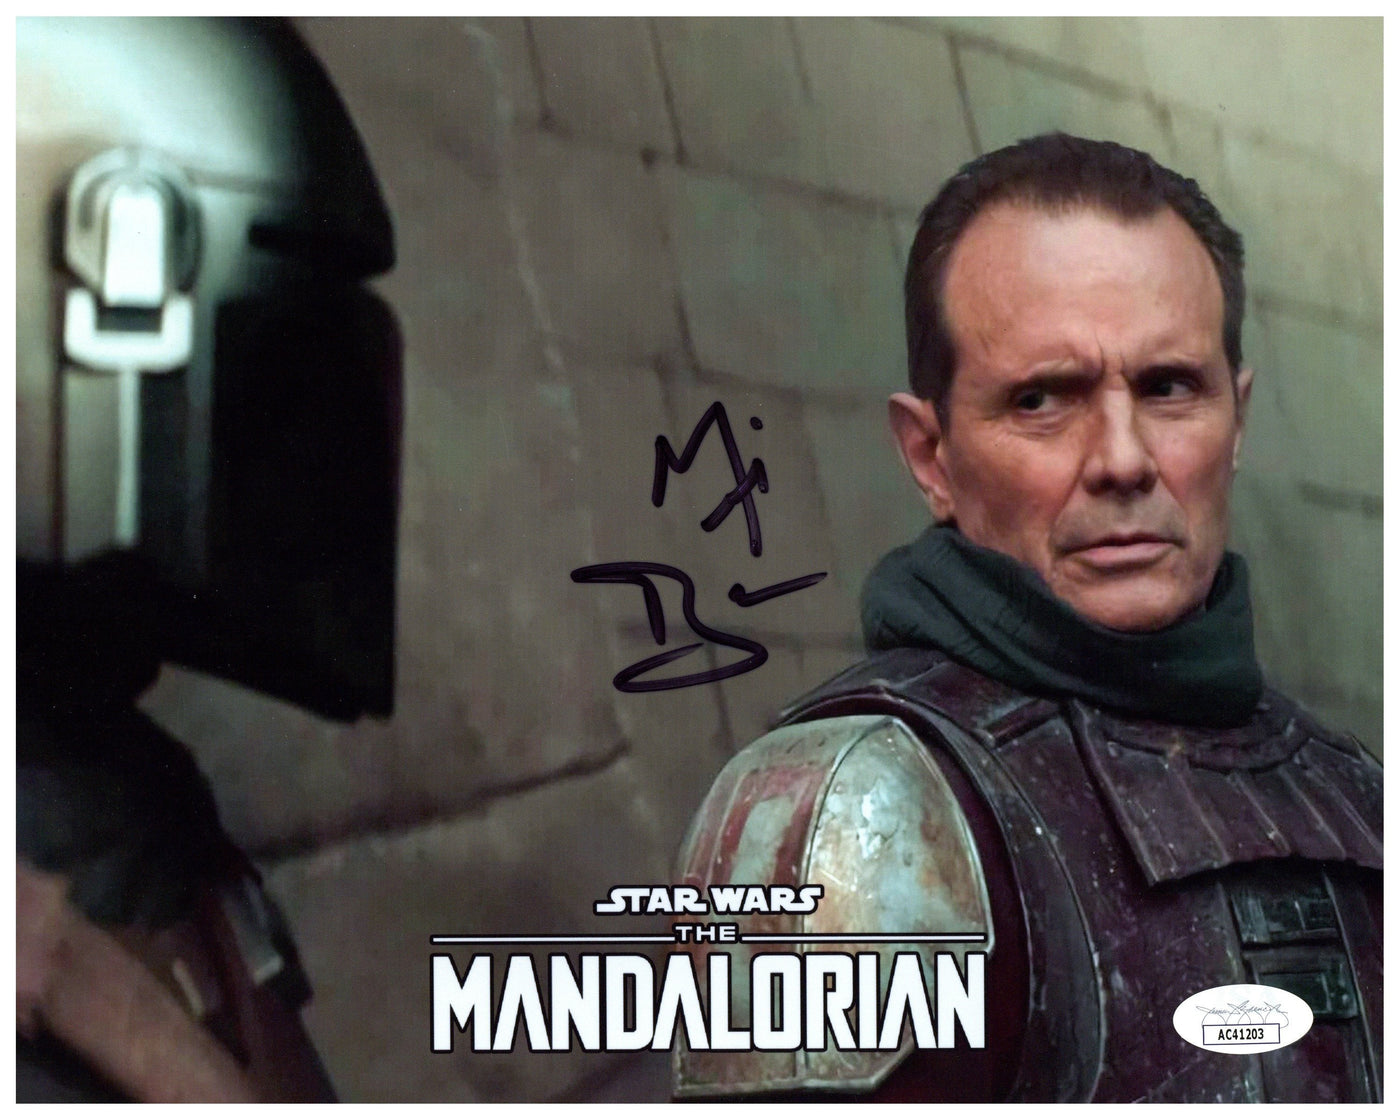 Michael Biehn Signed 8x10 Photo Star Wars The Mandalorian Autographed JSA COA